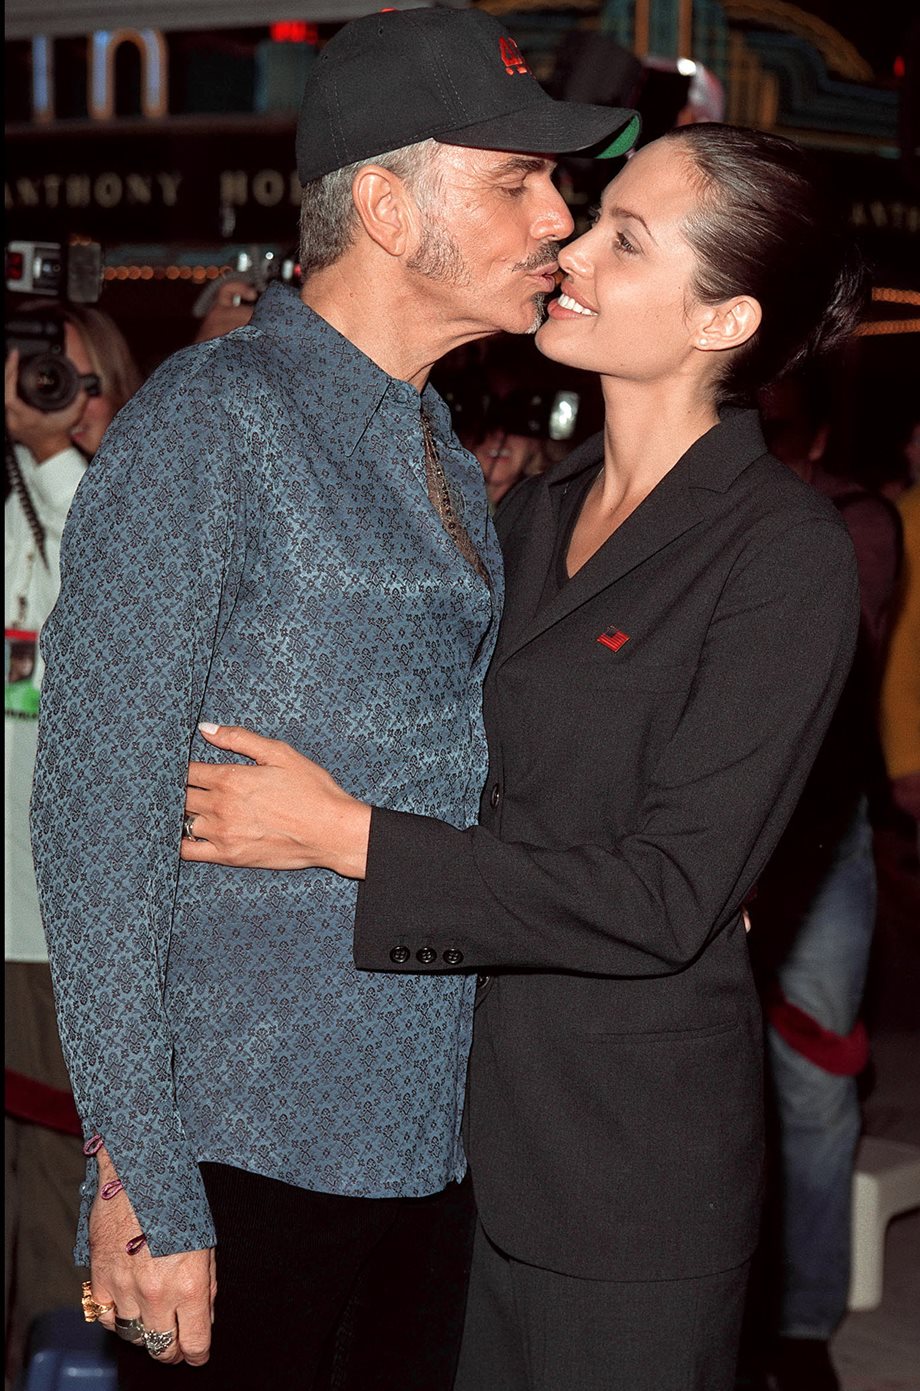 Angelina Jolie: Ο πρώην σύζυγός της Billy Bob Thornton, αποκαλύπτει 16 χρόνια μετά τον λόγο που πήραν διαζύγιο